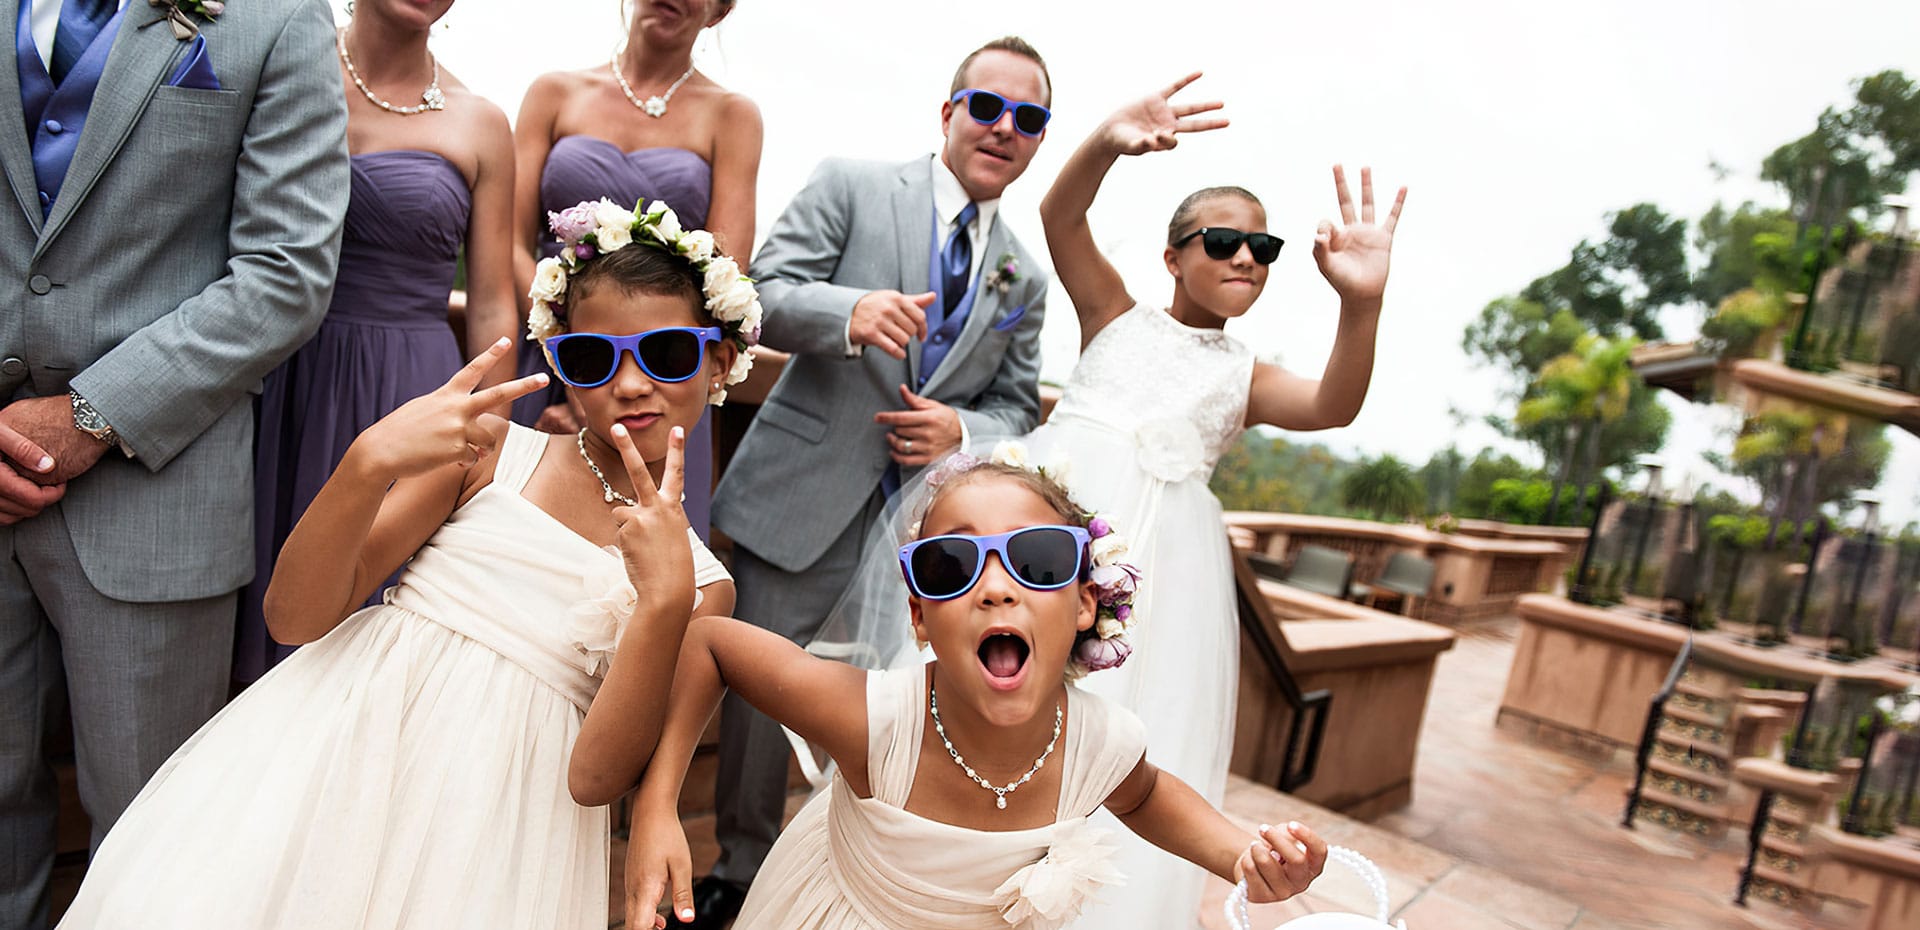 Image Of Fun Ways to Incorporate Kids in Your Wedding. Furbabies too!